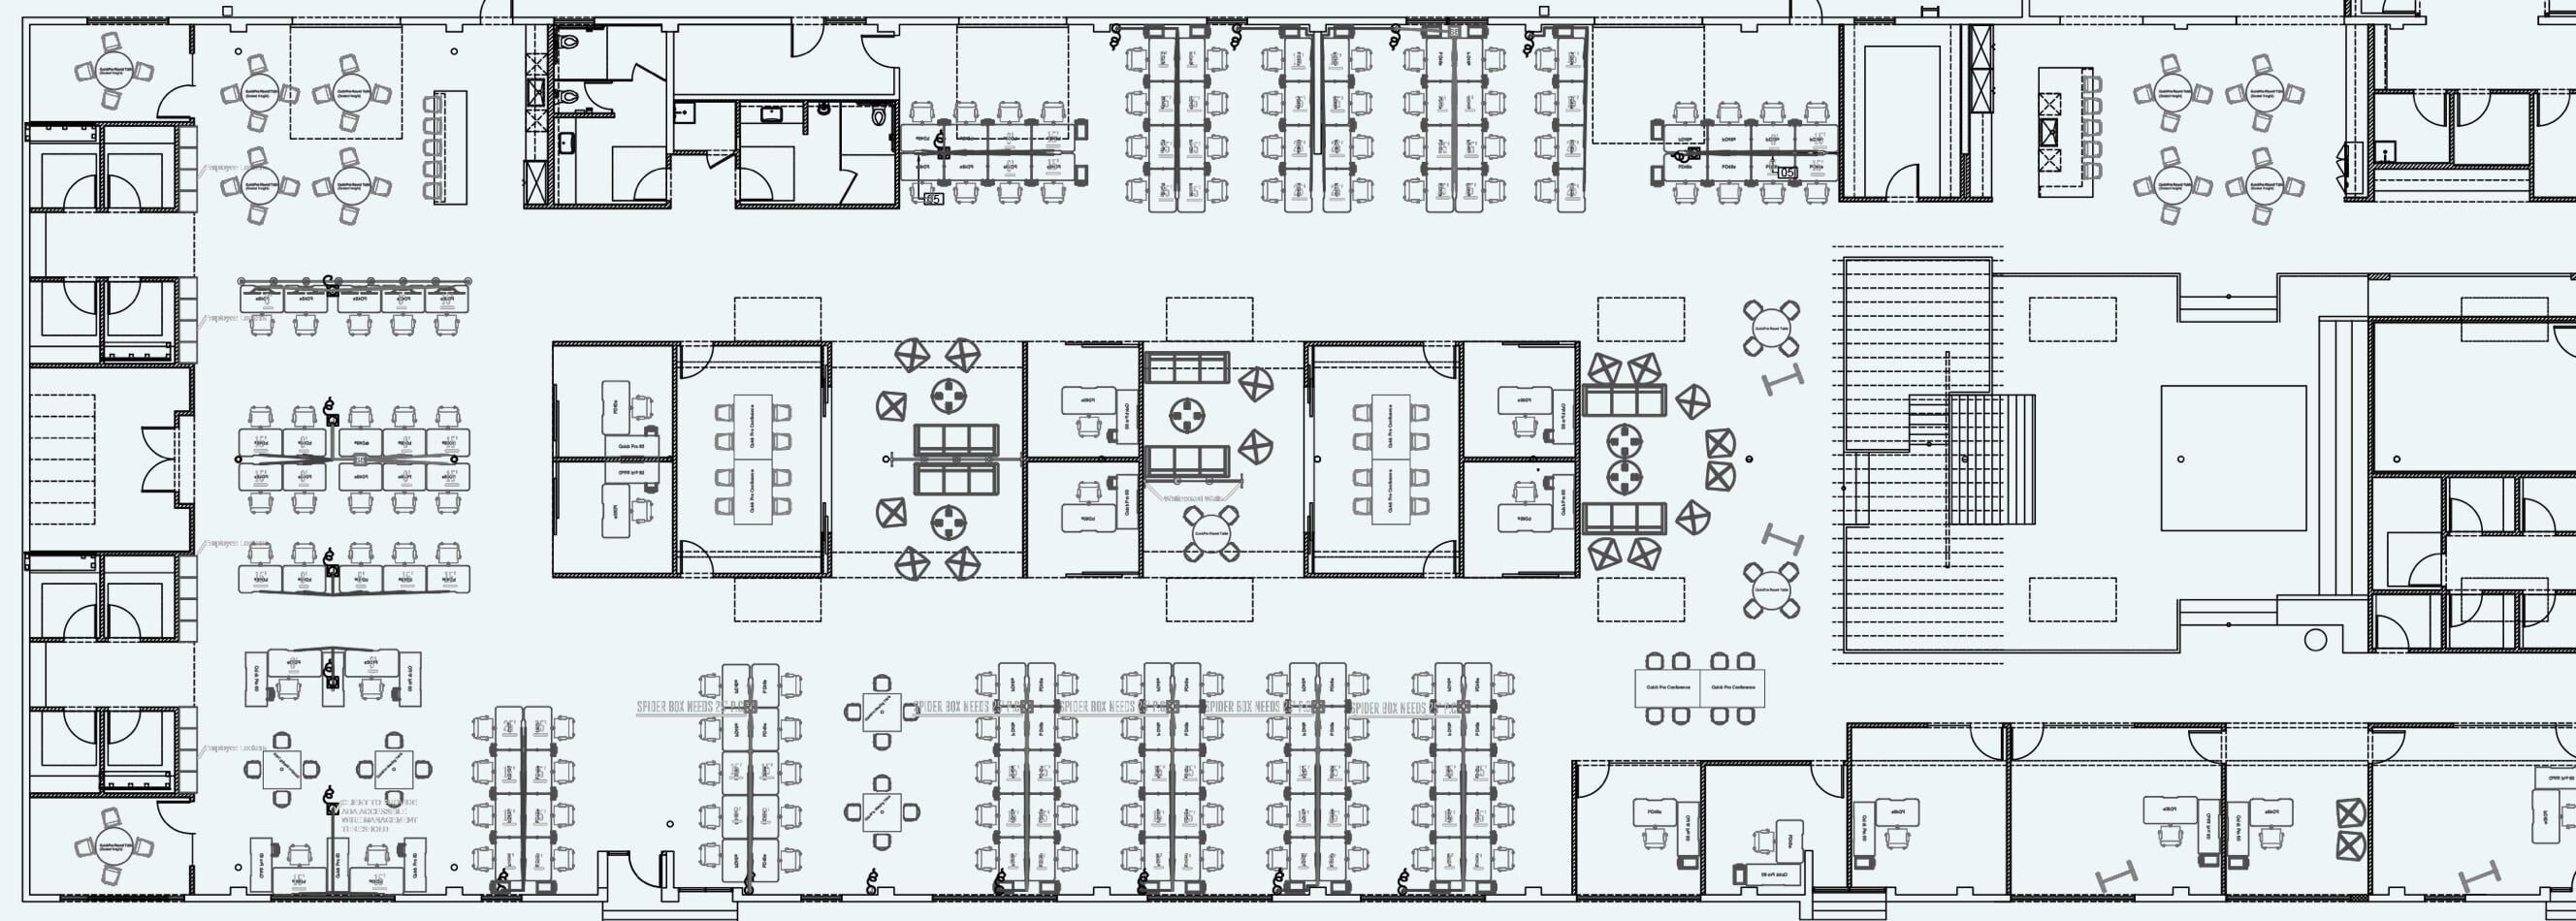 floor plan for hawke media space  image